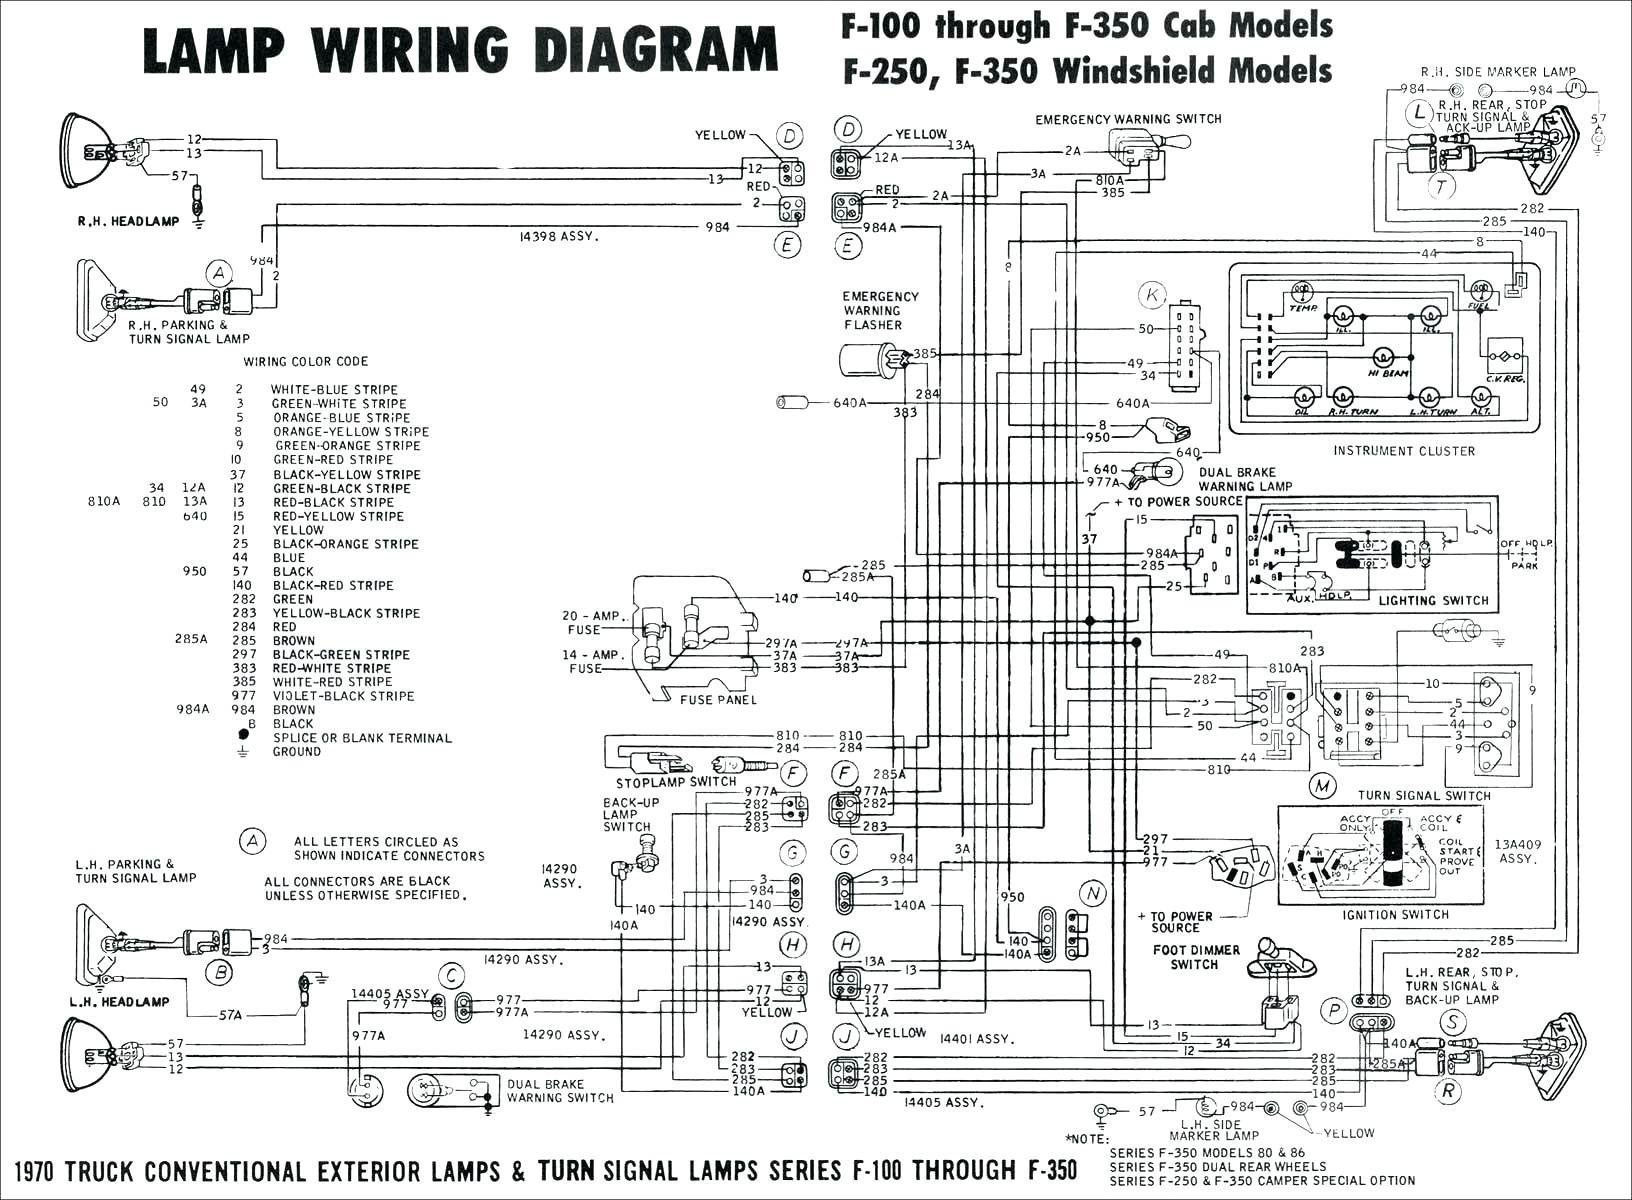 6 20R Receptacle Wiring Diagram | Wiring Diagram - Nema 6-20R Wiring Diagram